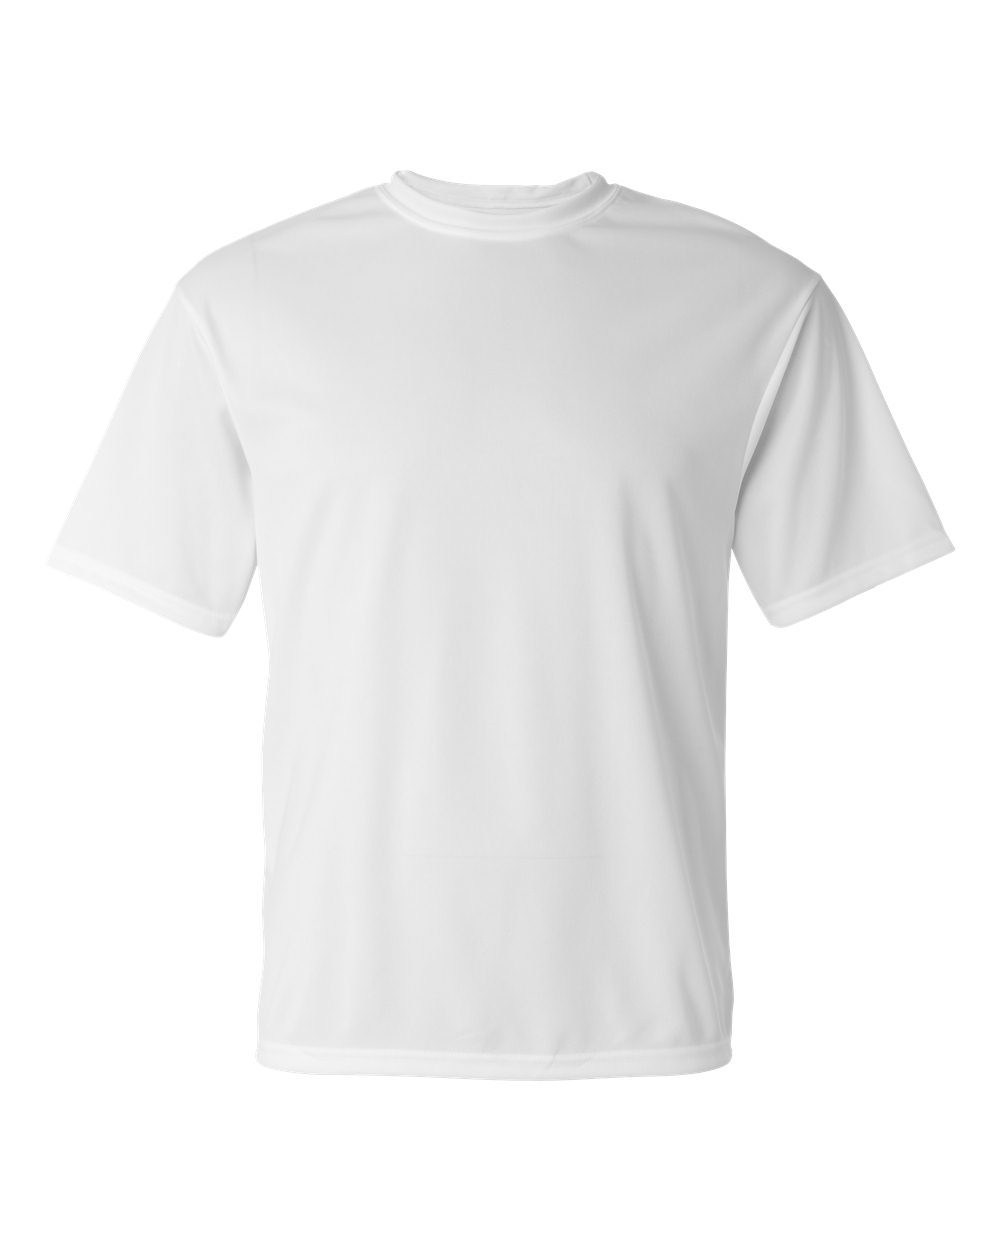 C2 Sport 5100 Performance Shirt :: White, Size 2X